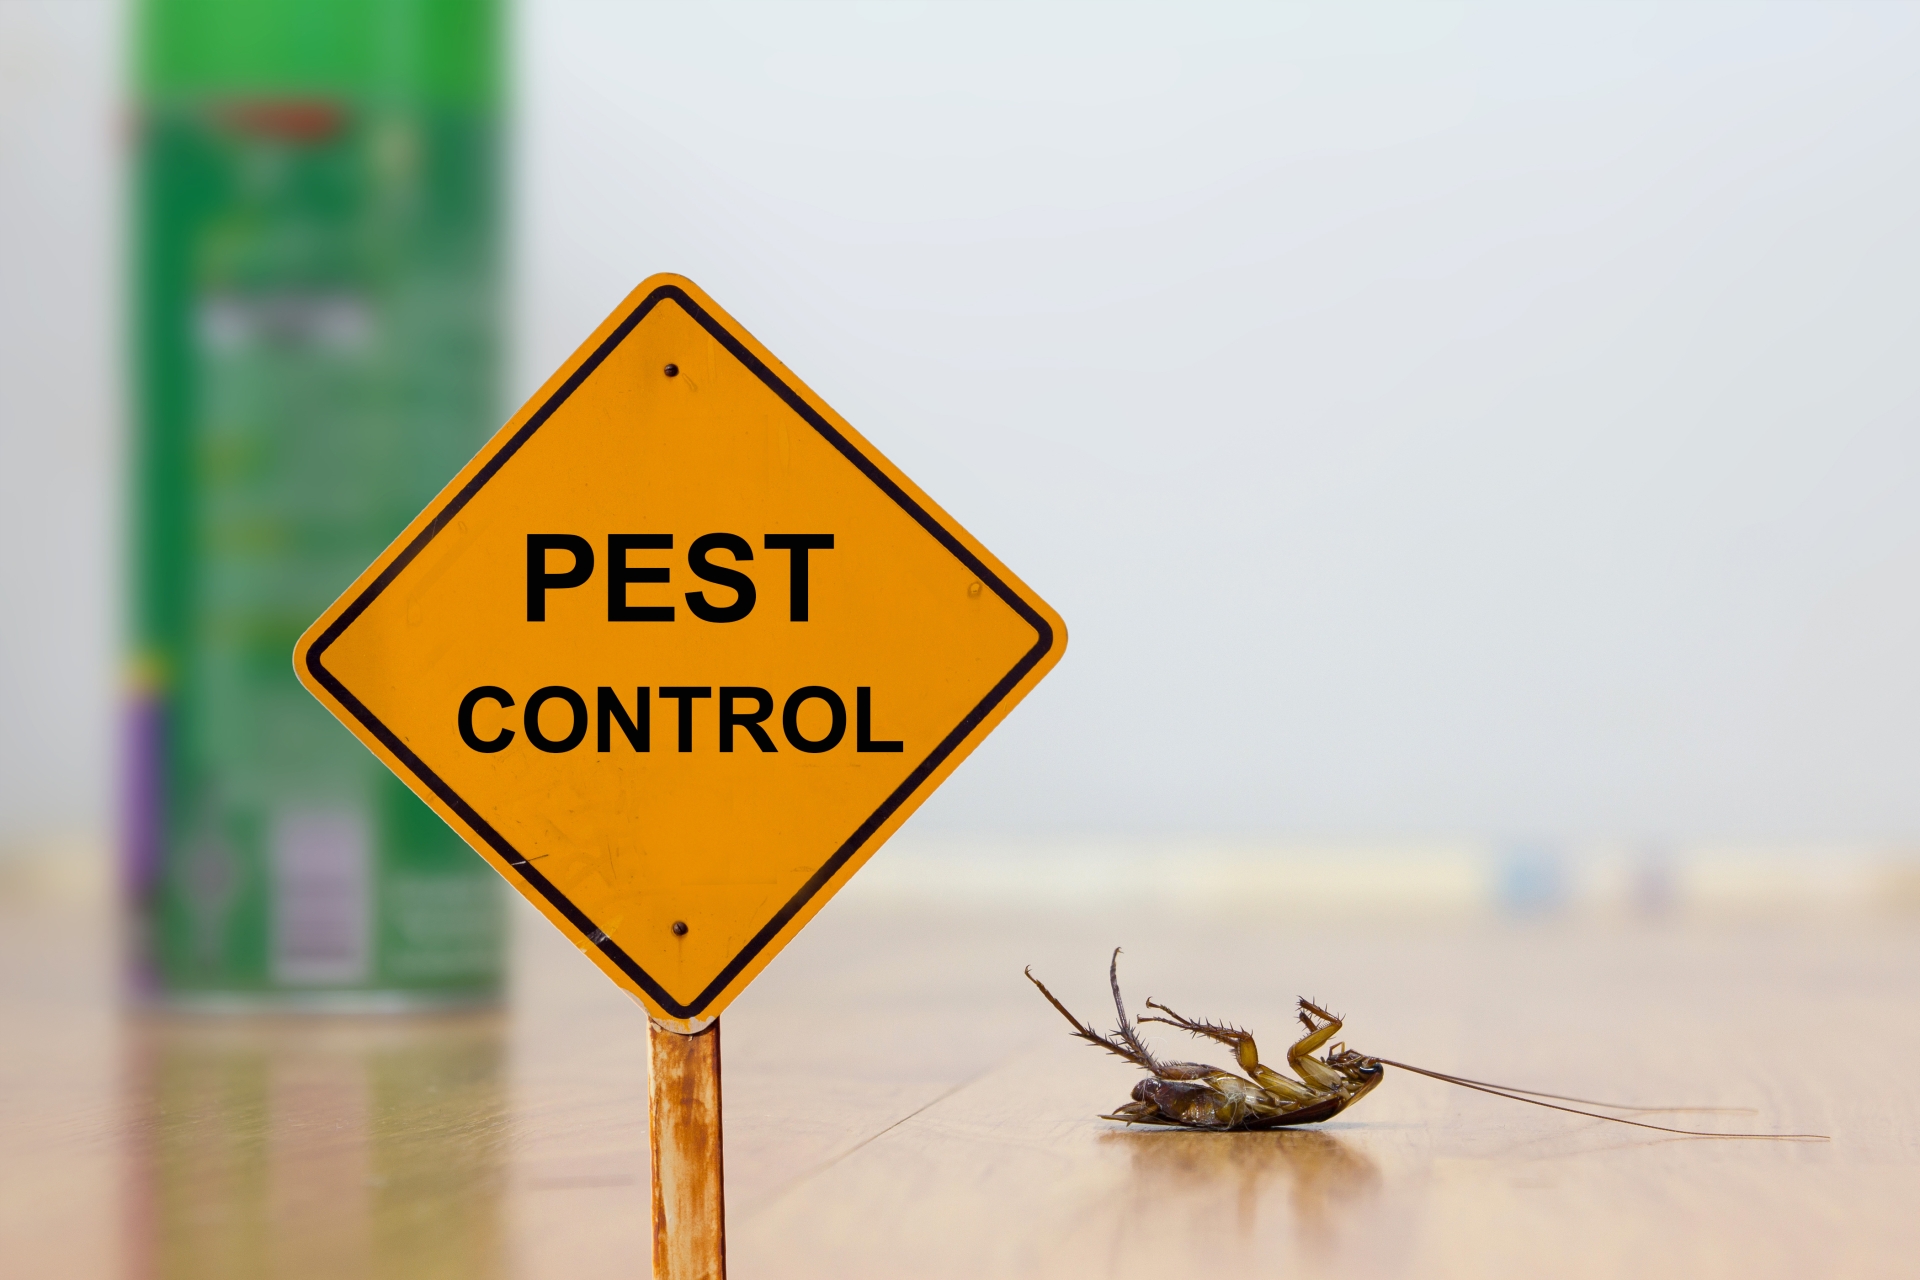 24 Hour Pest Control, Pest Control in Mayfair, Marylebone, W1. Call Now 020 8166 9746